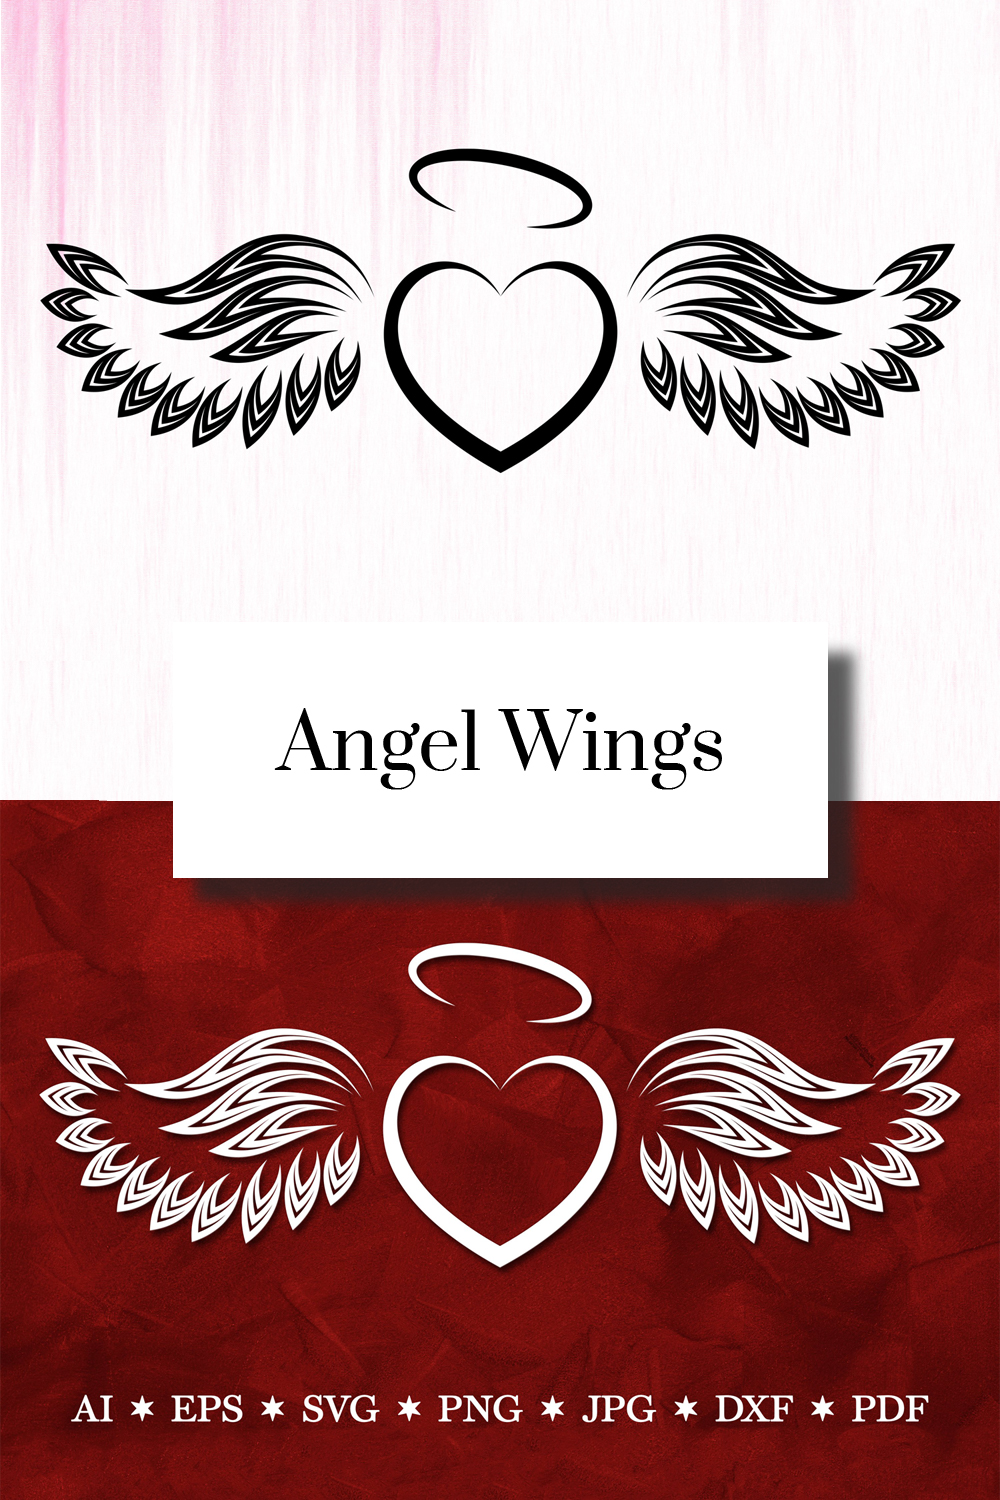 Angel wings of pinterest.